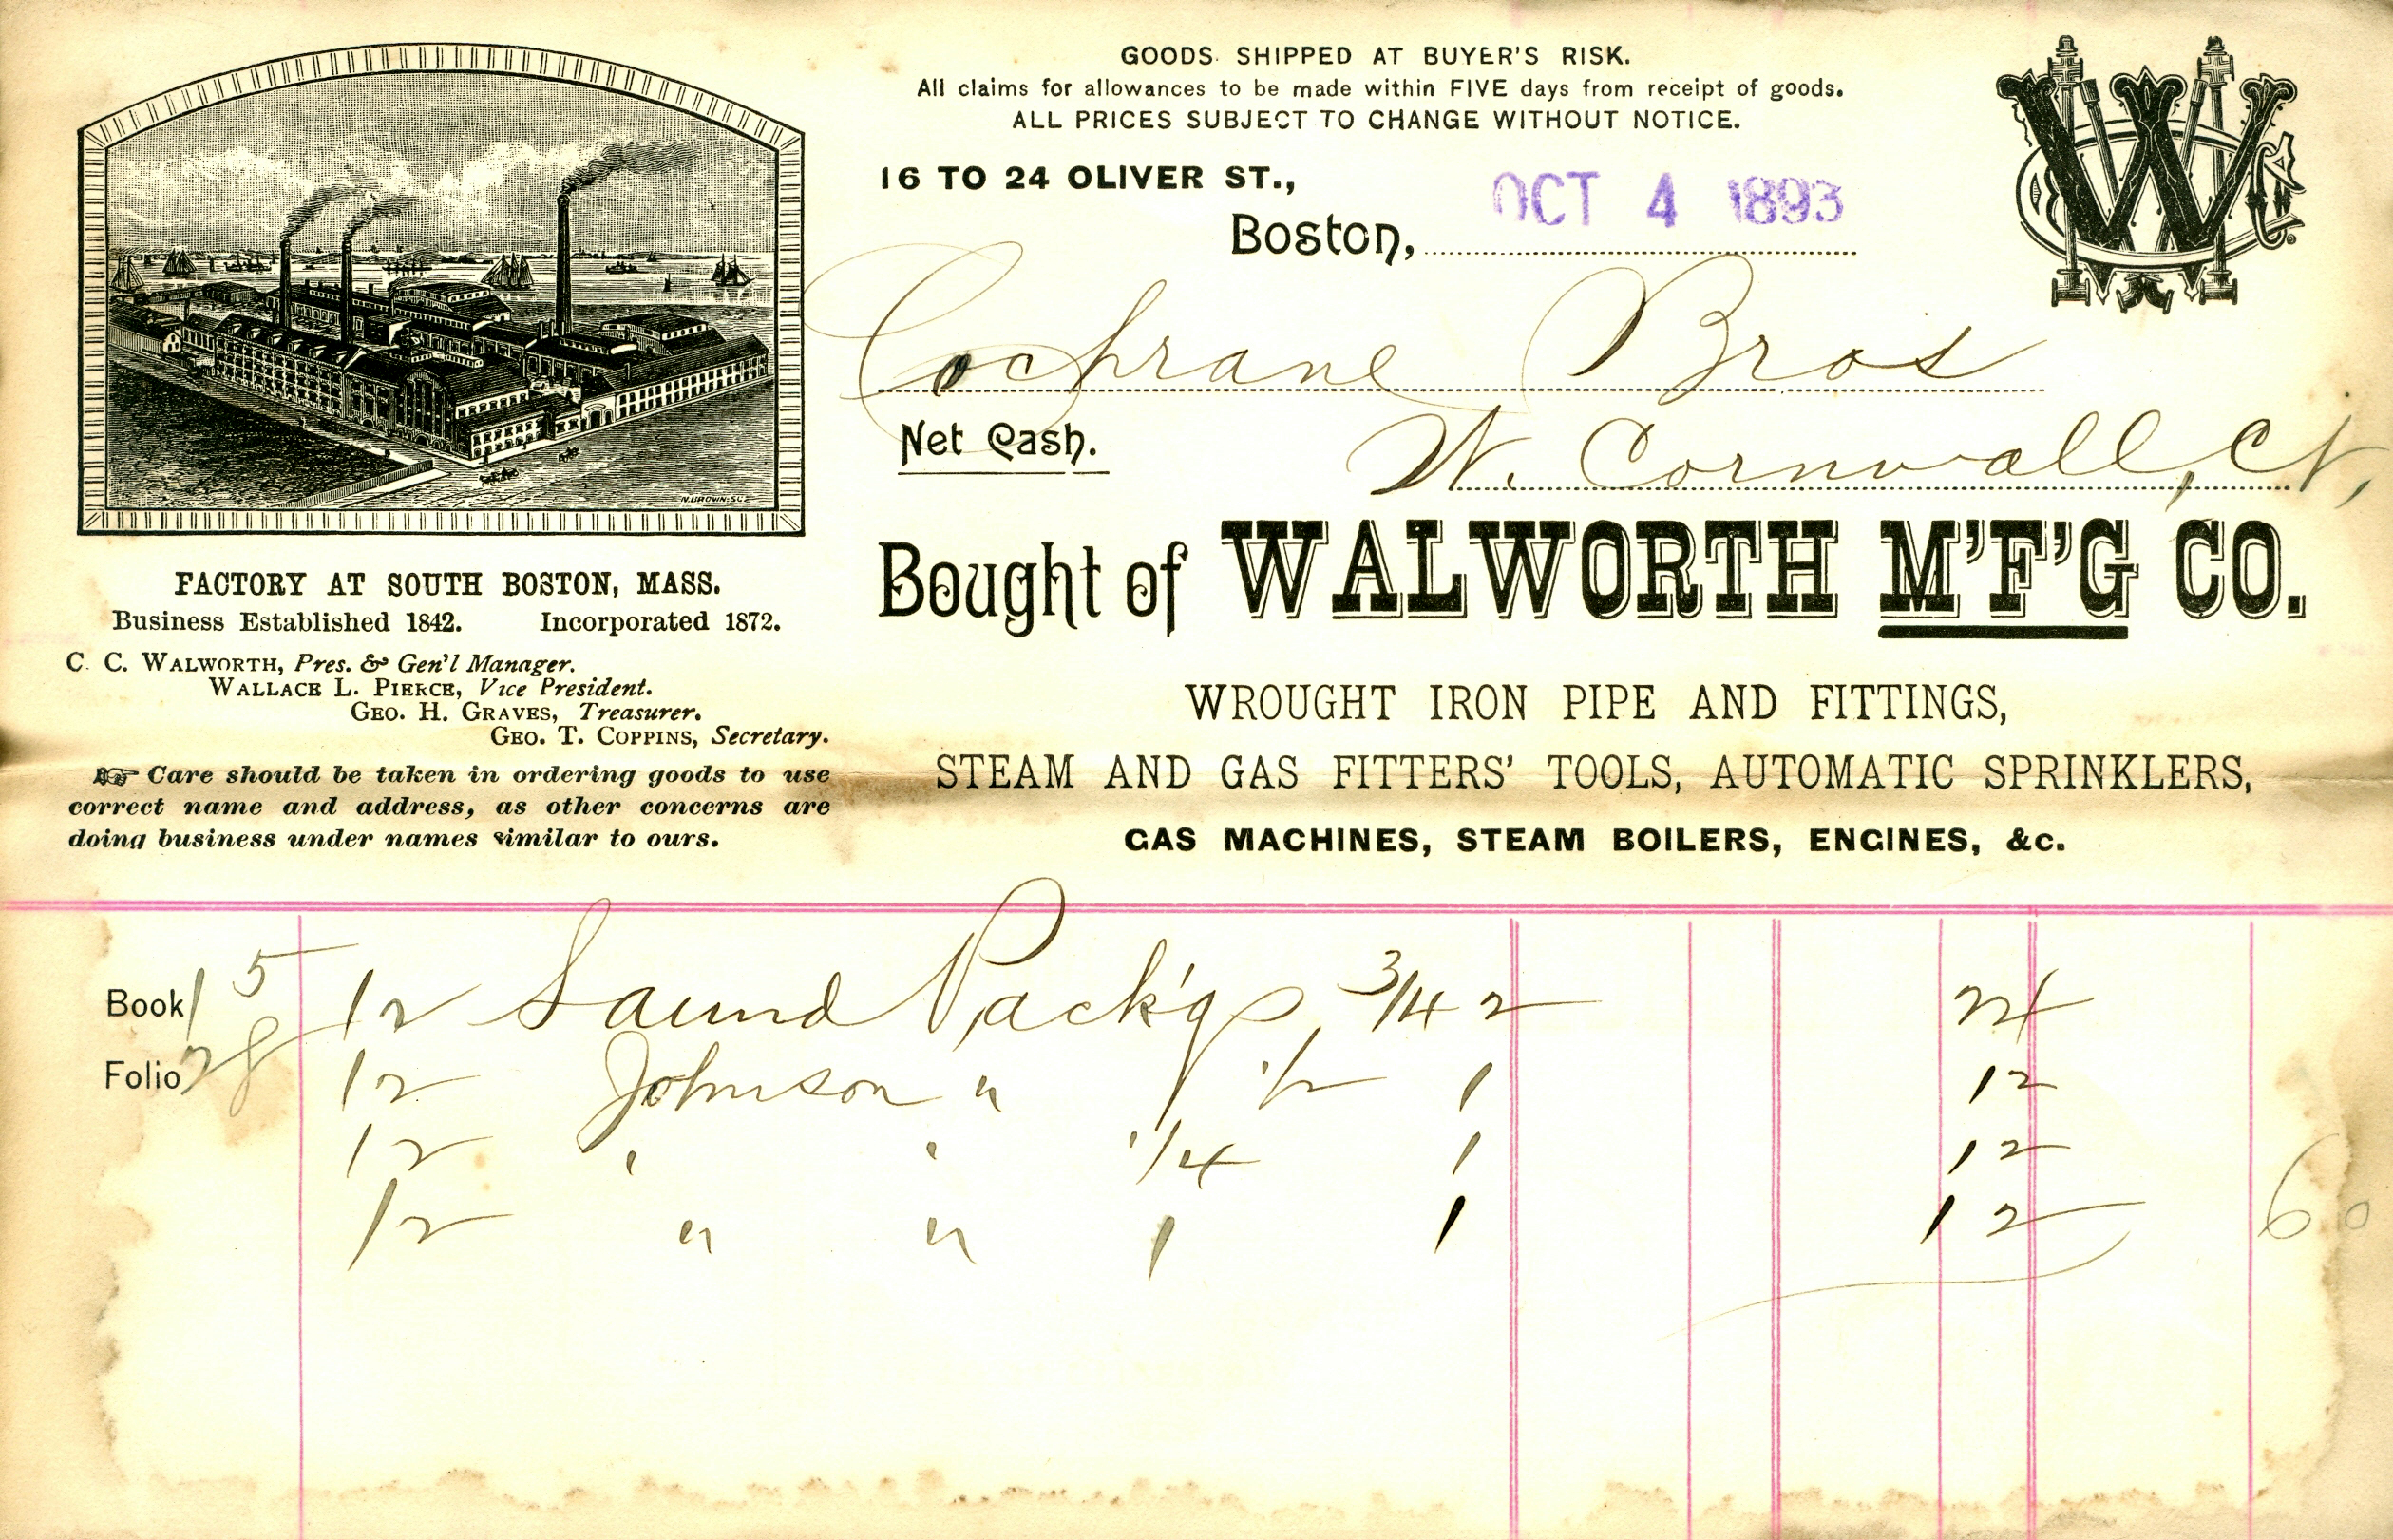 Oct 4 1893 Walworth MFG Co Invoice